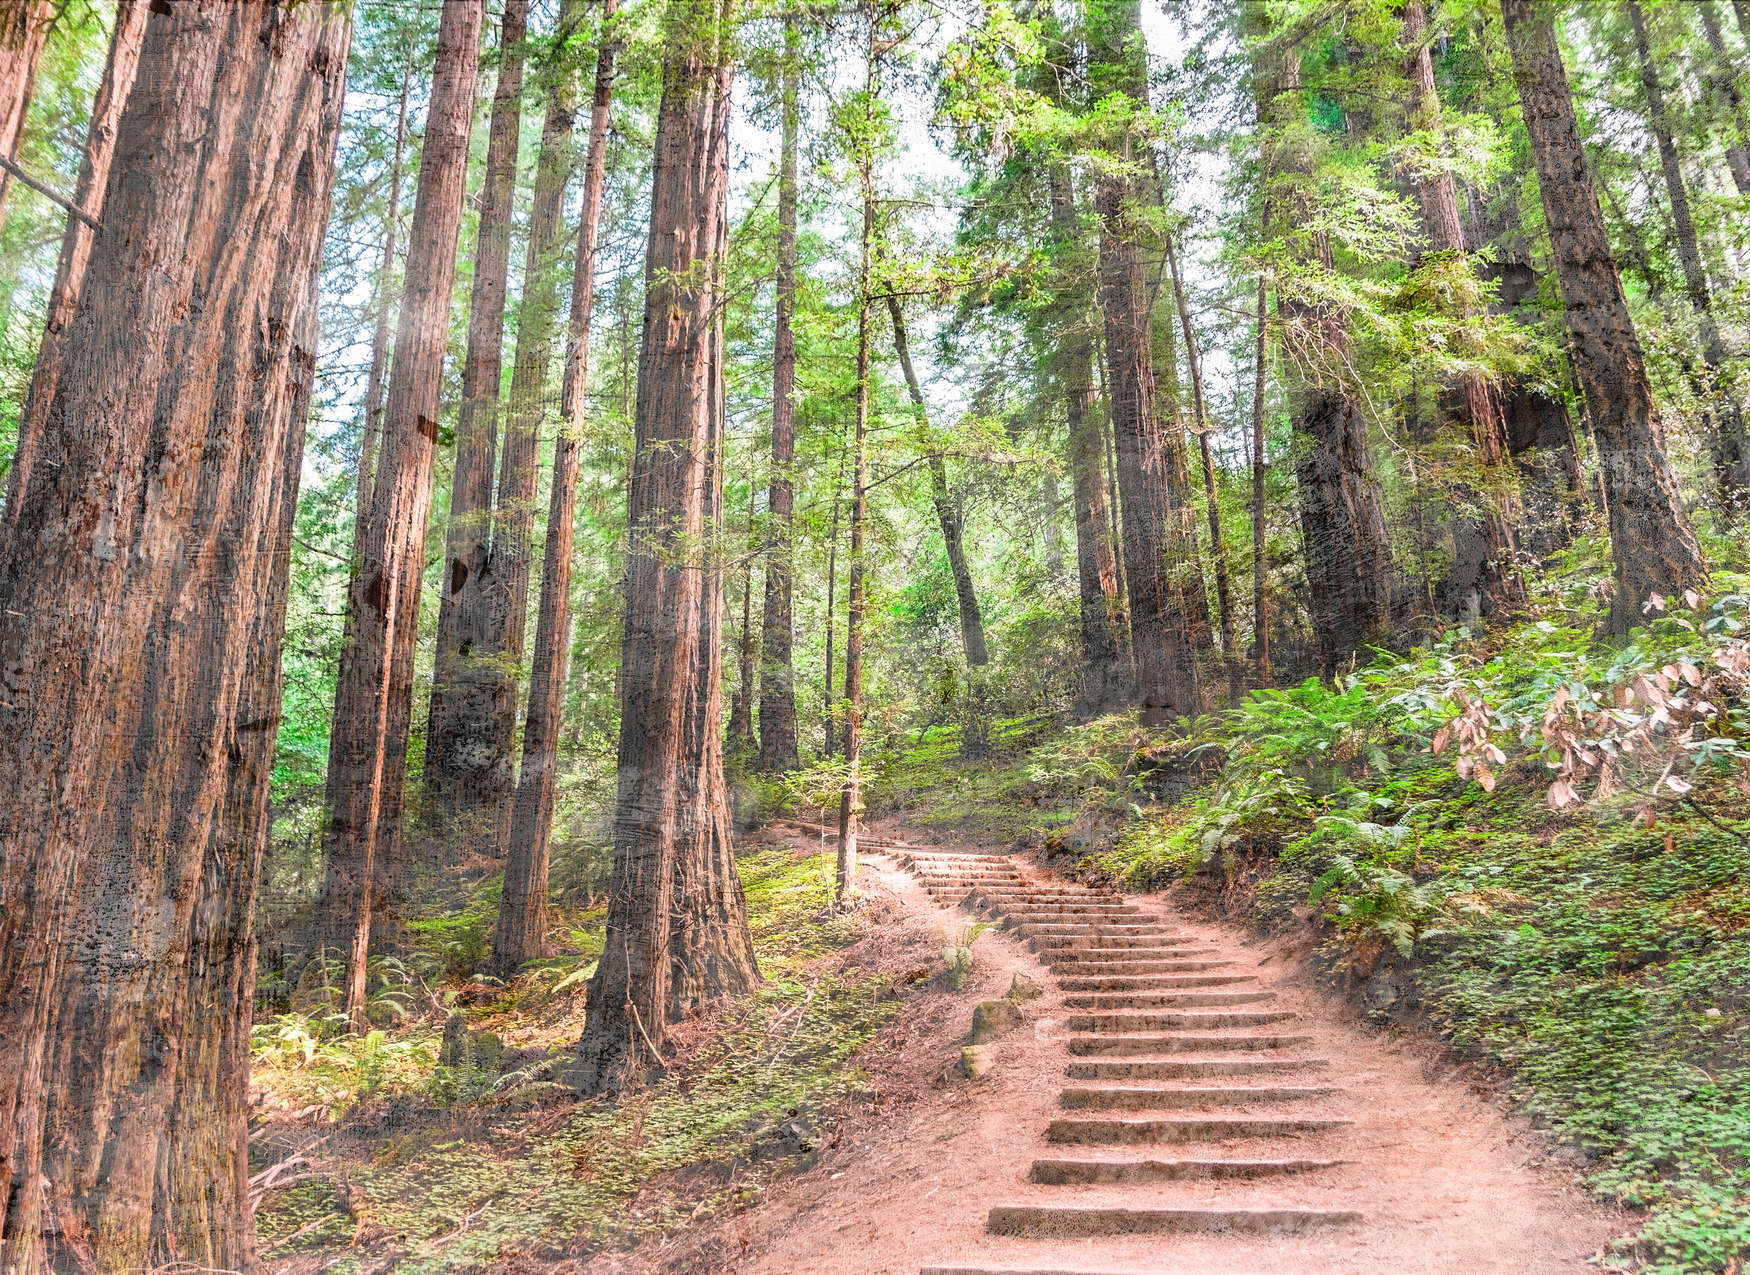             Holztreppe durch den Wald – Braun, Grün, Blau
        